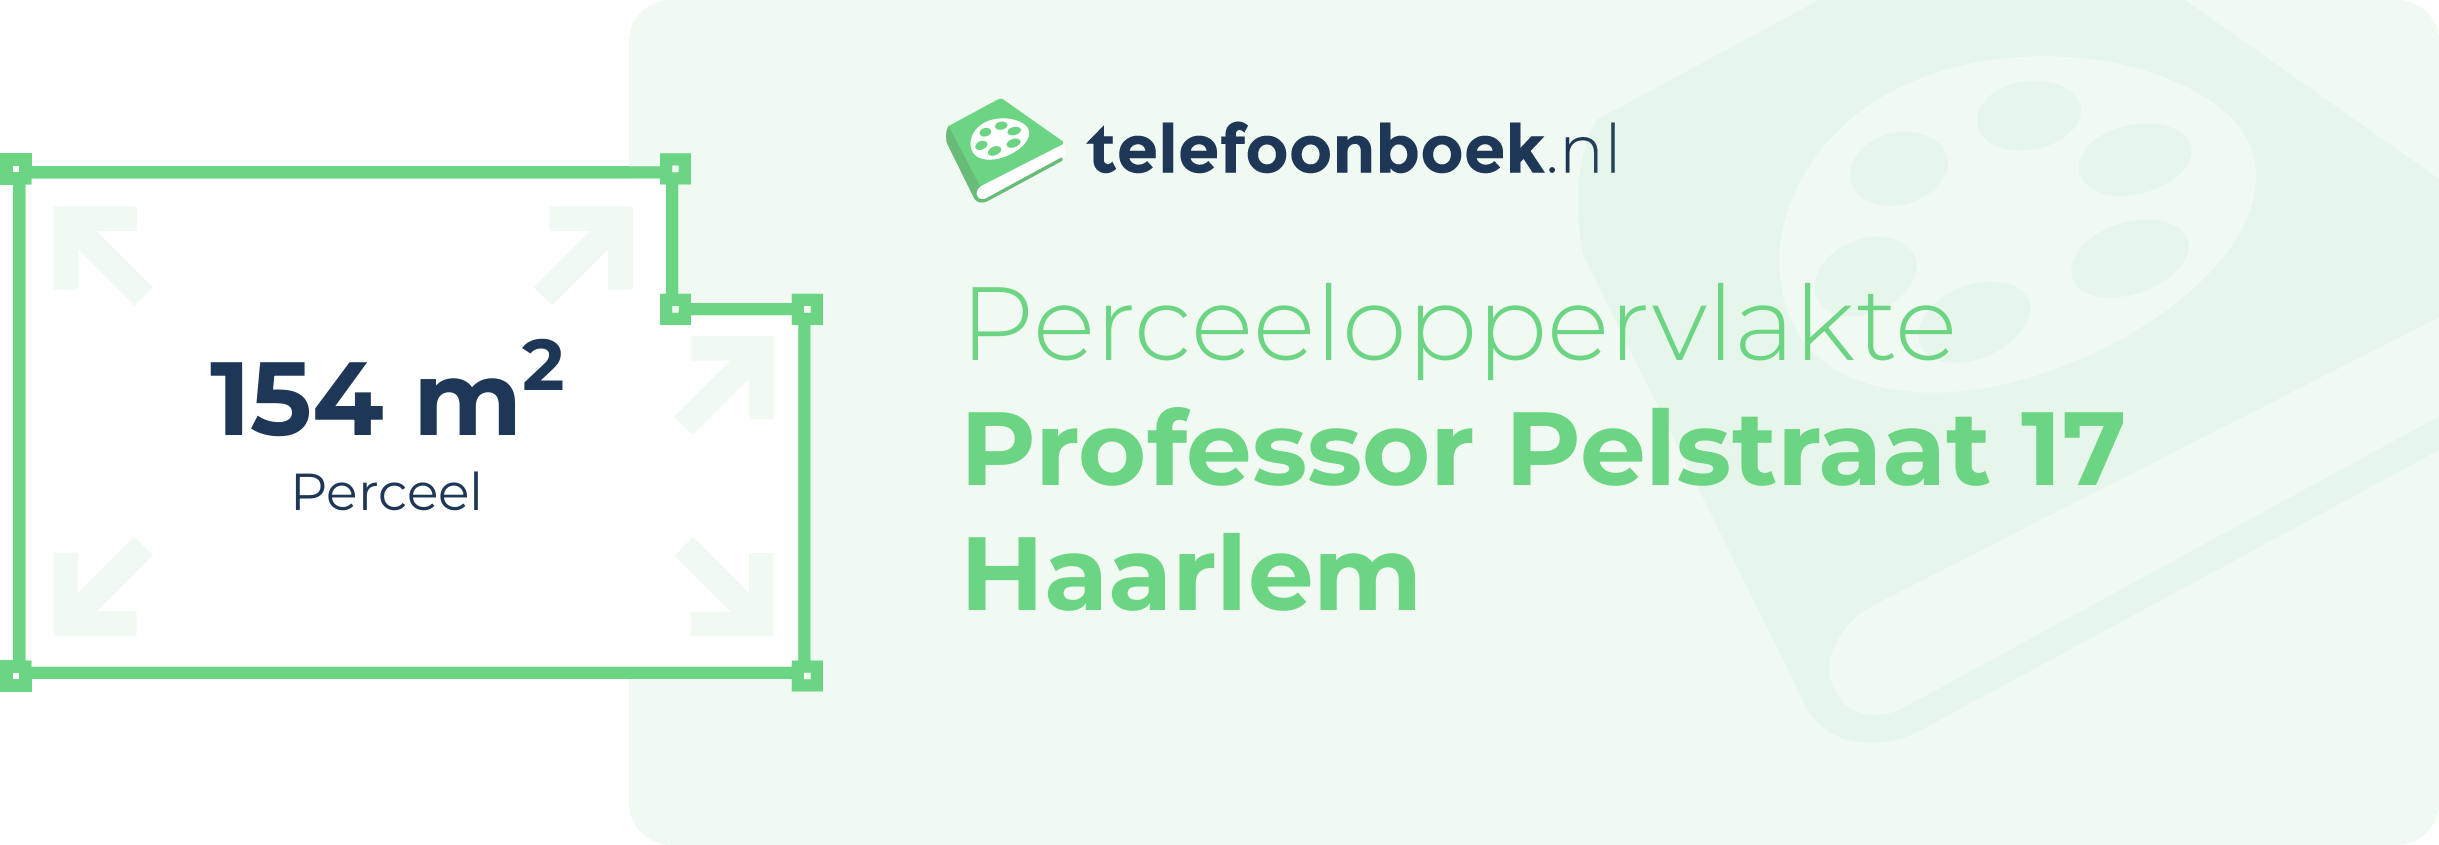 Perceeloppervlakte Professor Pelstraat 17 Haarlem